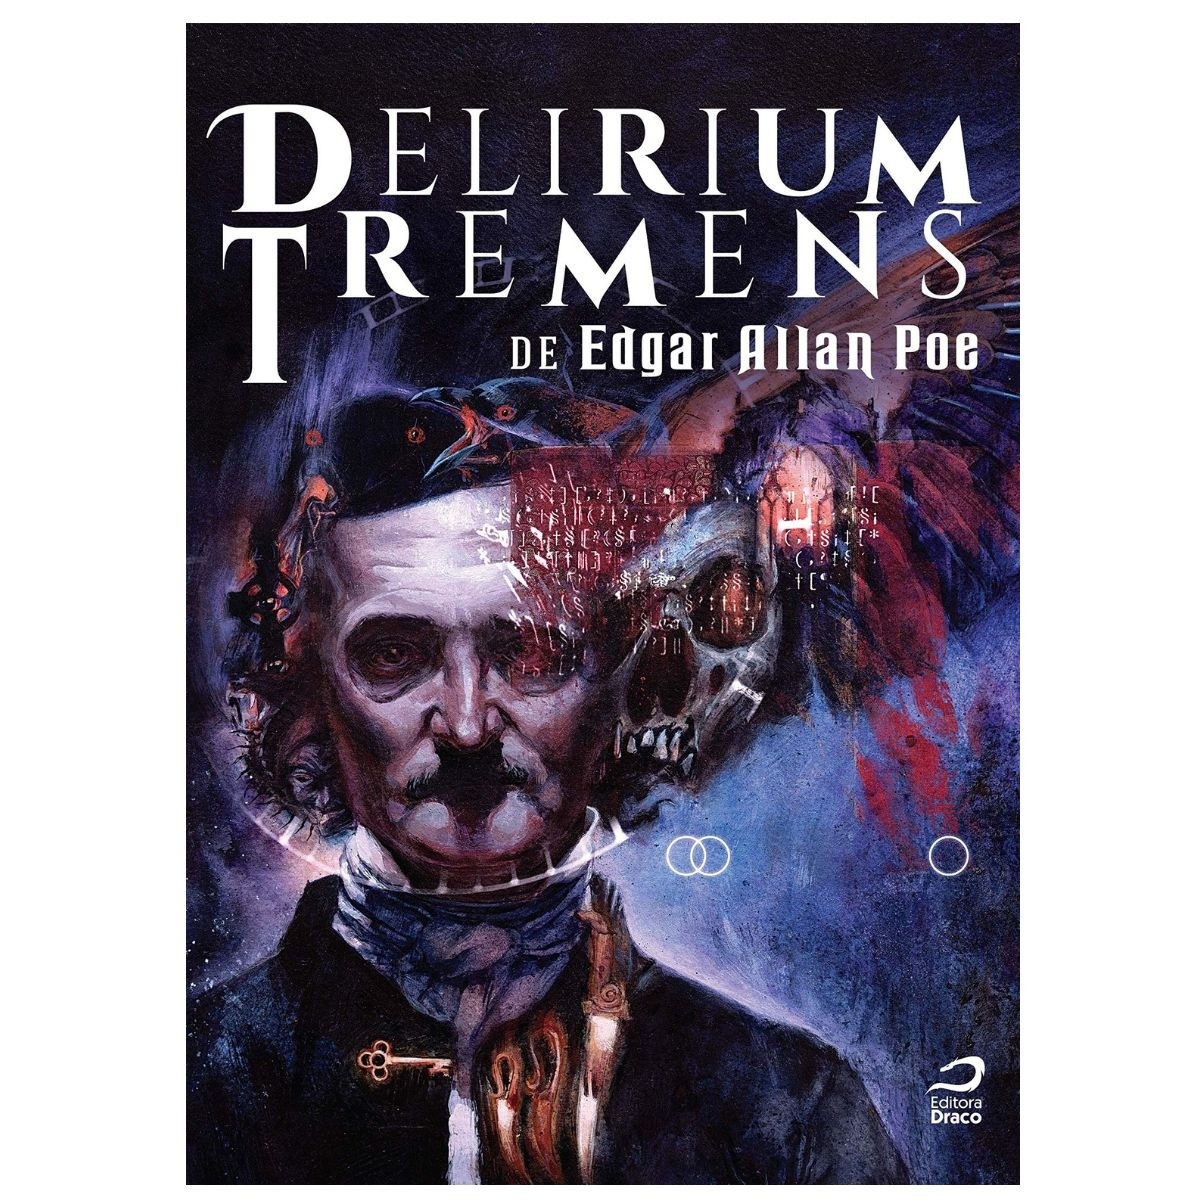 Delirium Tremens de Edgar Allan Poe - HQ - Draco Editora